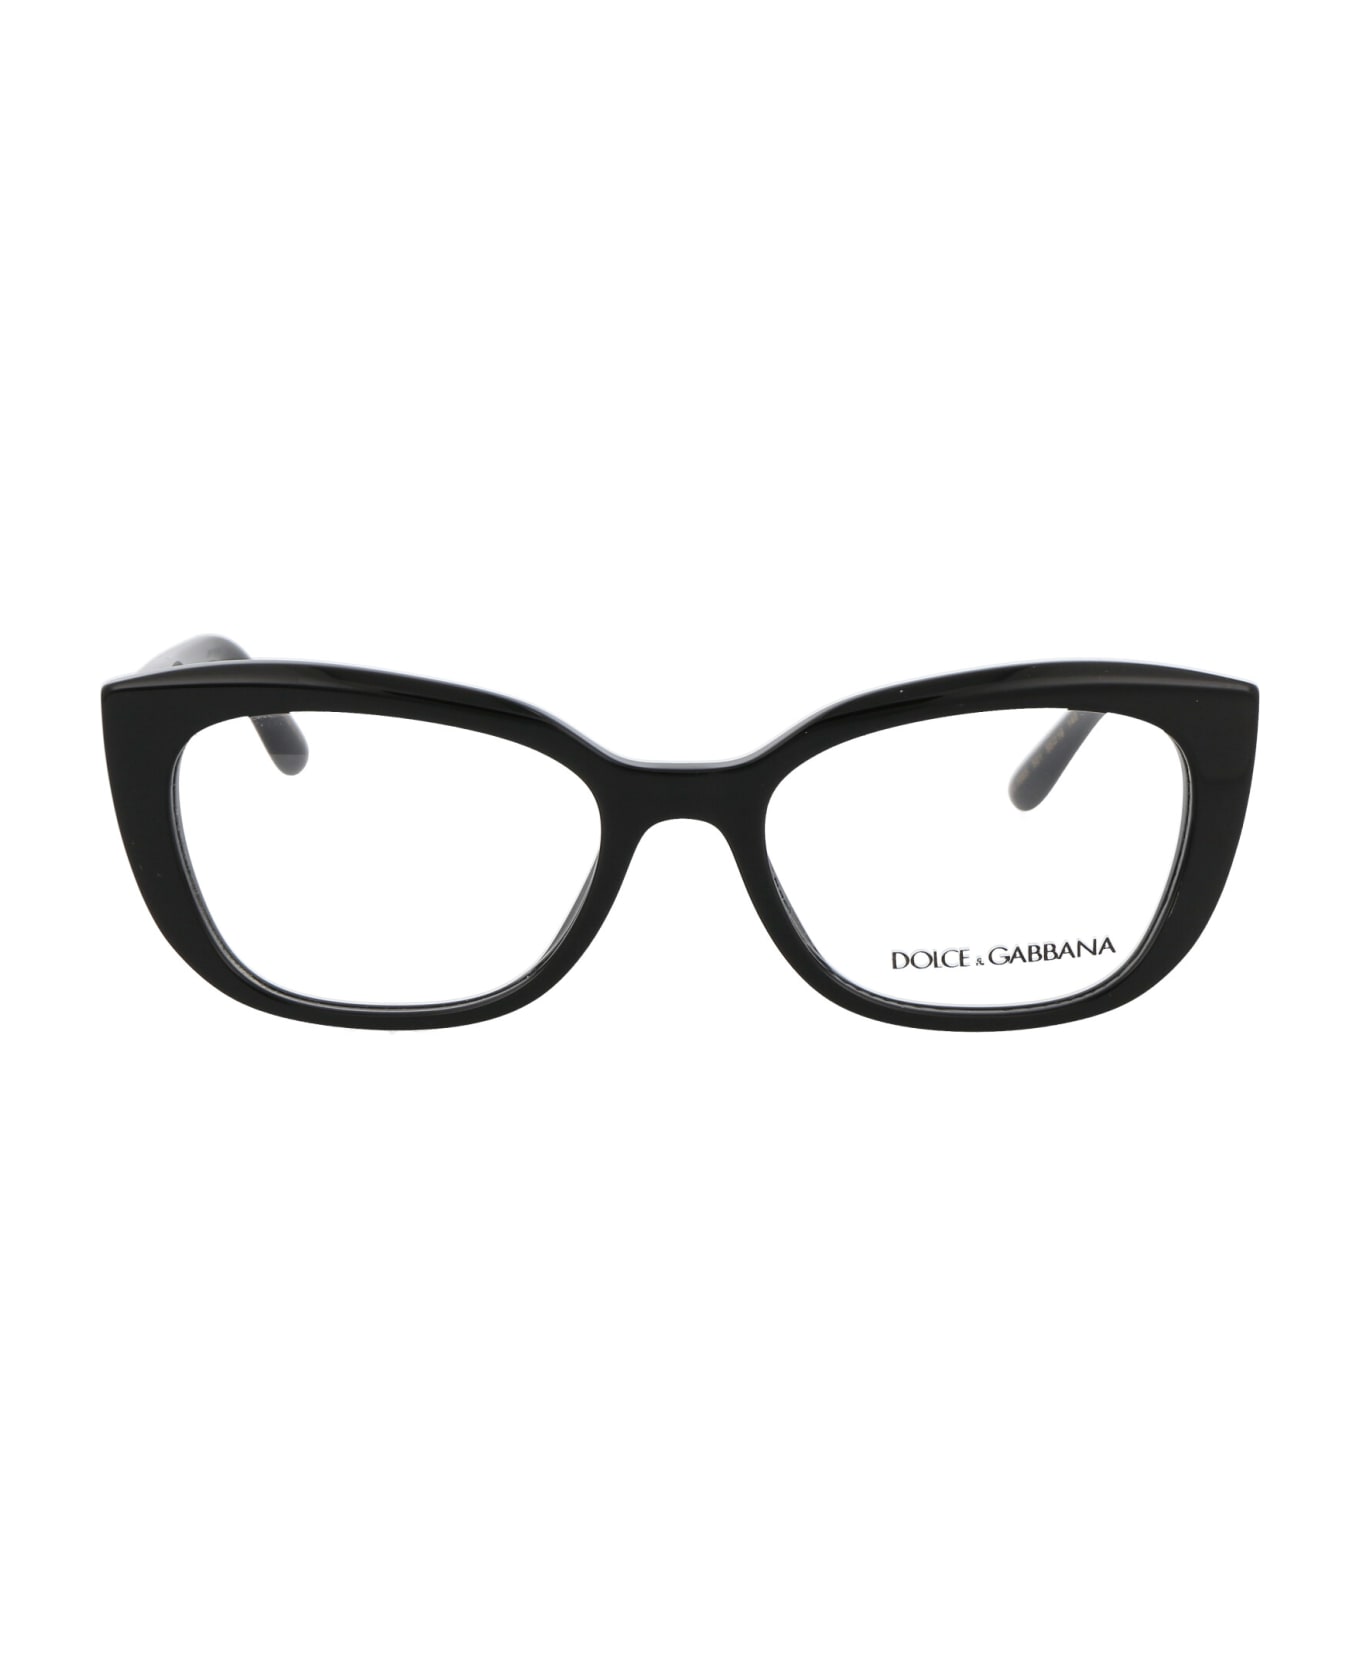 Dolce & Gabbana Eyewear 0dg3355 Glasses - 501 BLACK